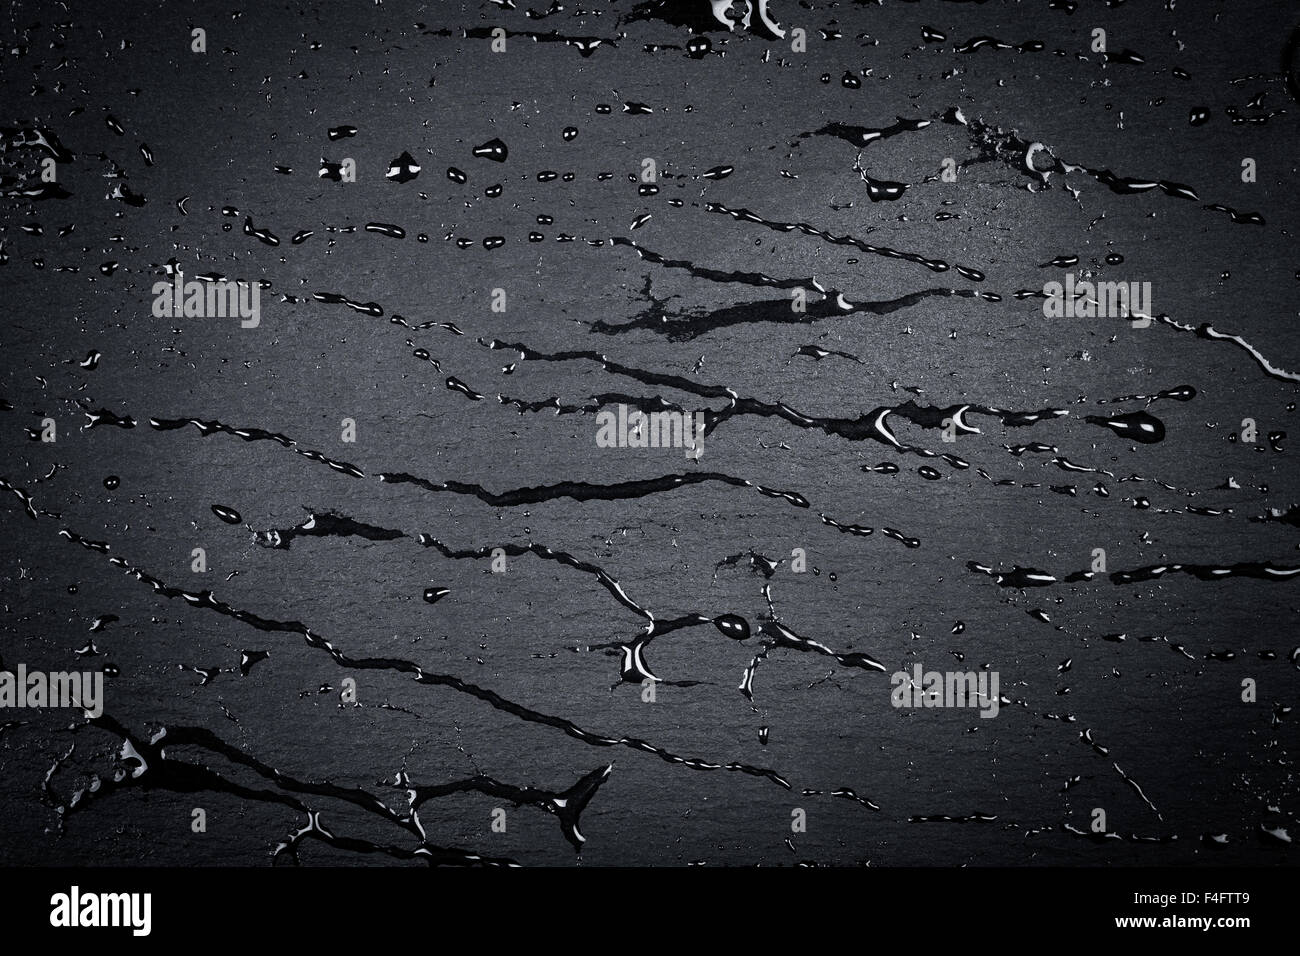 Water drops on dark stone surface of basalt or granite Stock Photo